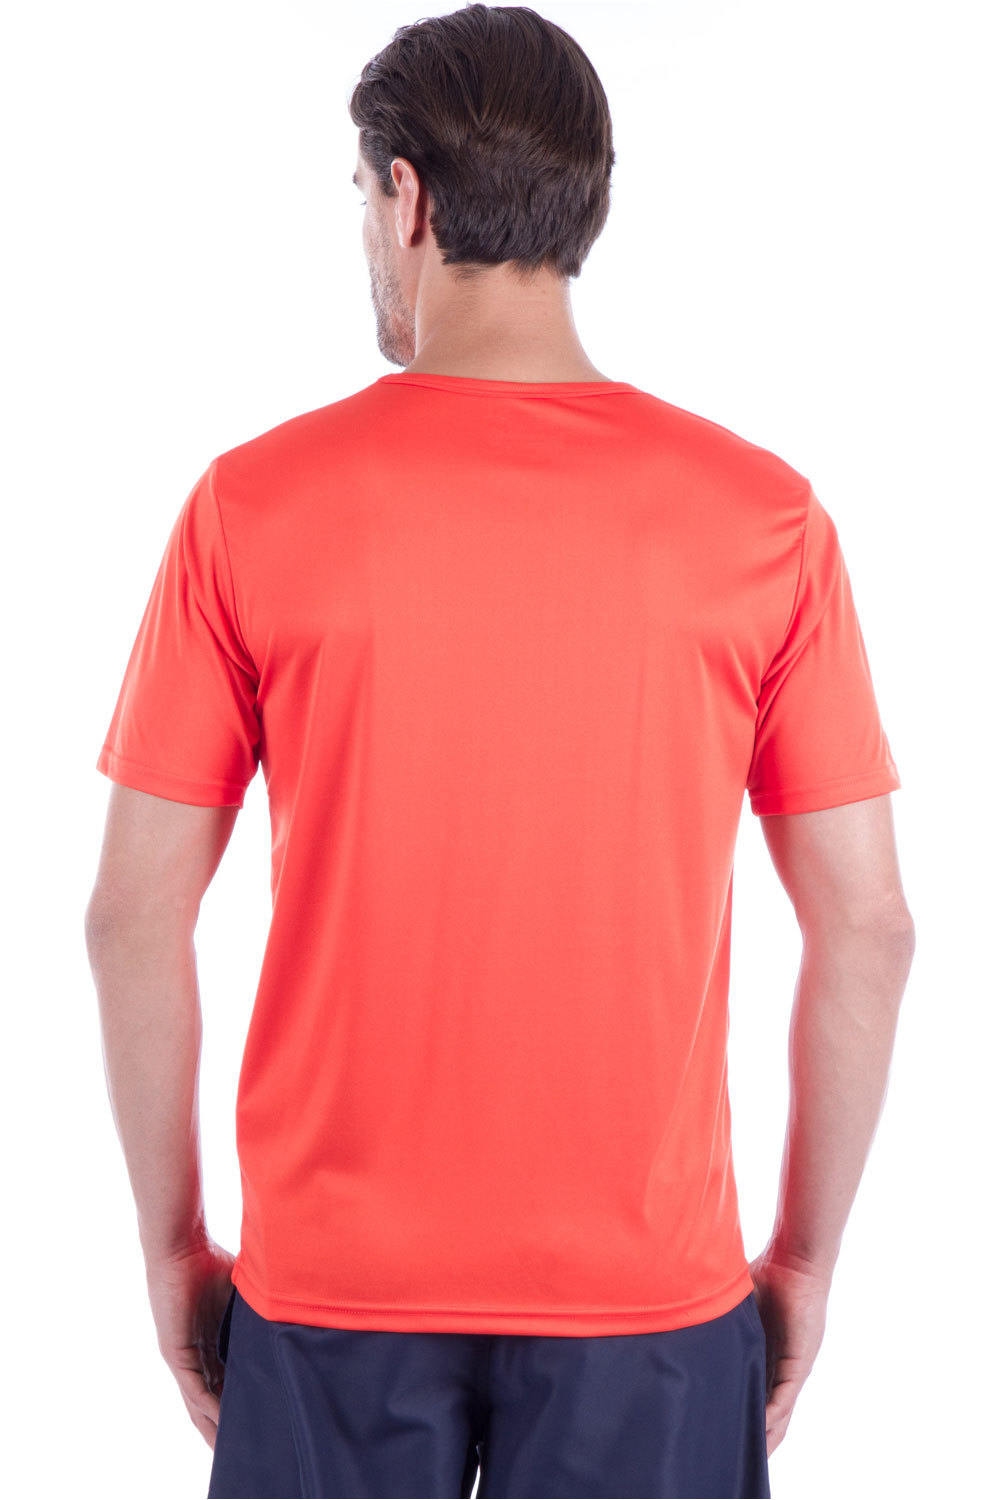 Masspro camiseta tenis manga corta hombre T-AETO GRANADINE vista trasera